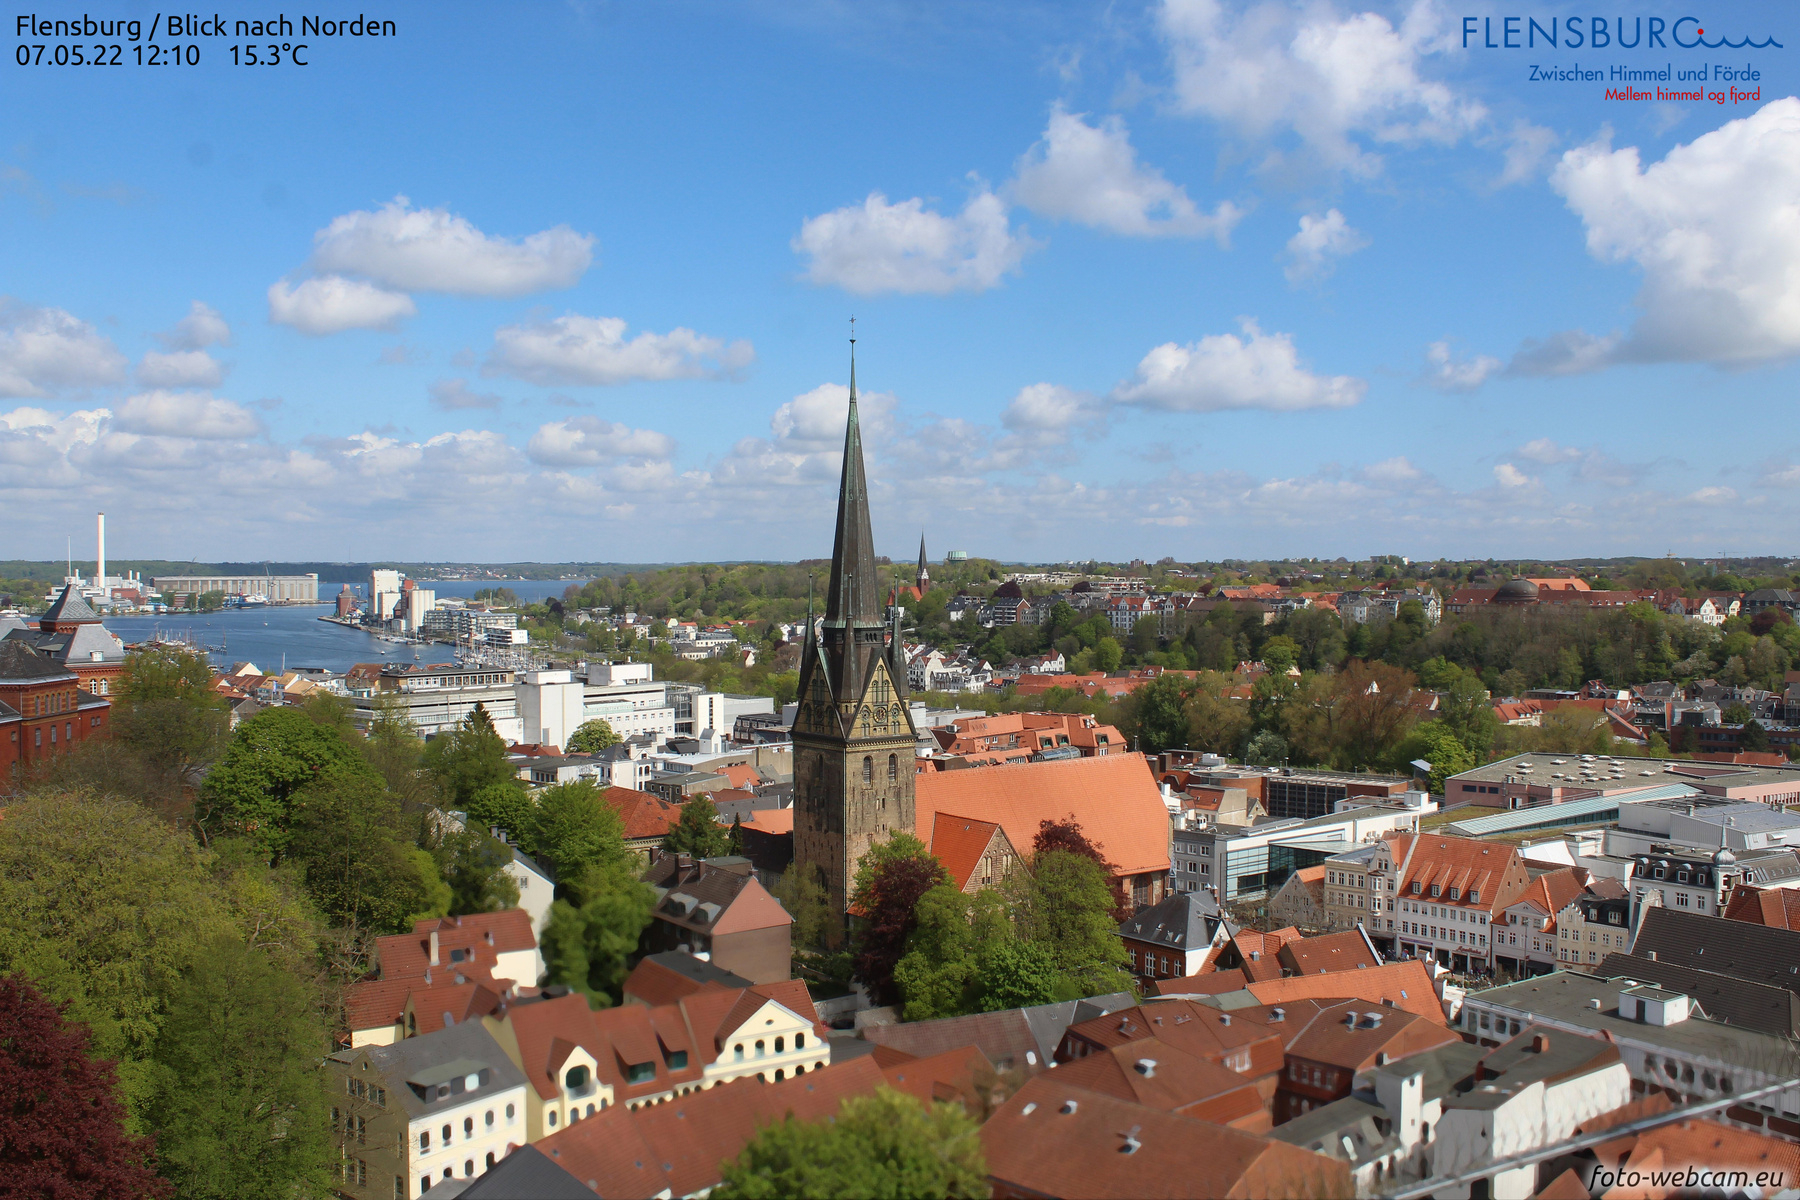 Blick vom Flensburger Rathaus Richtung Norden, (c) https://www.foto-webcam.eu/webcam/flensburg/